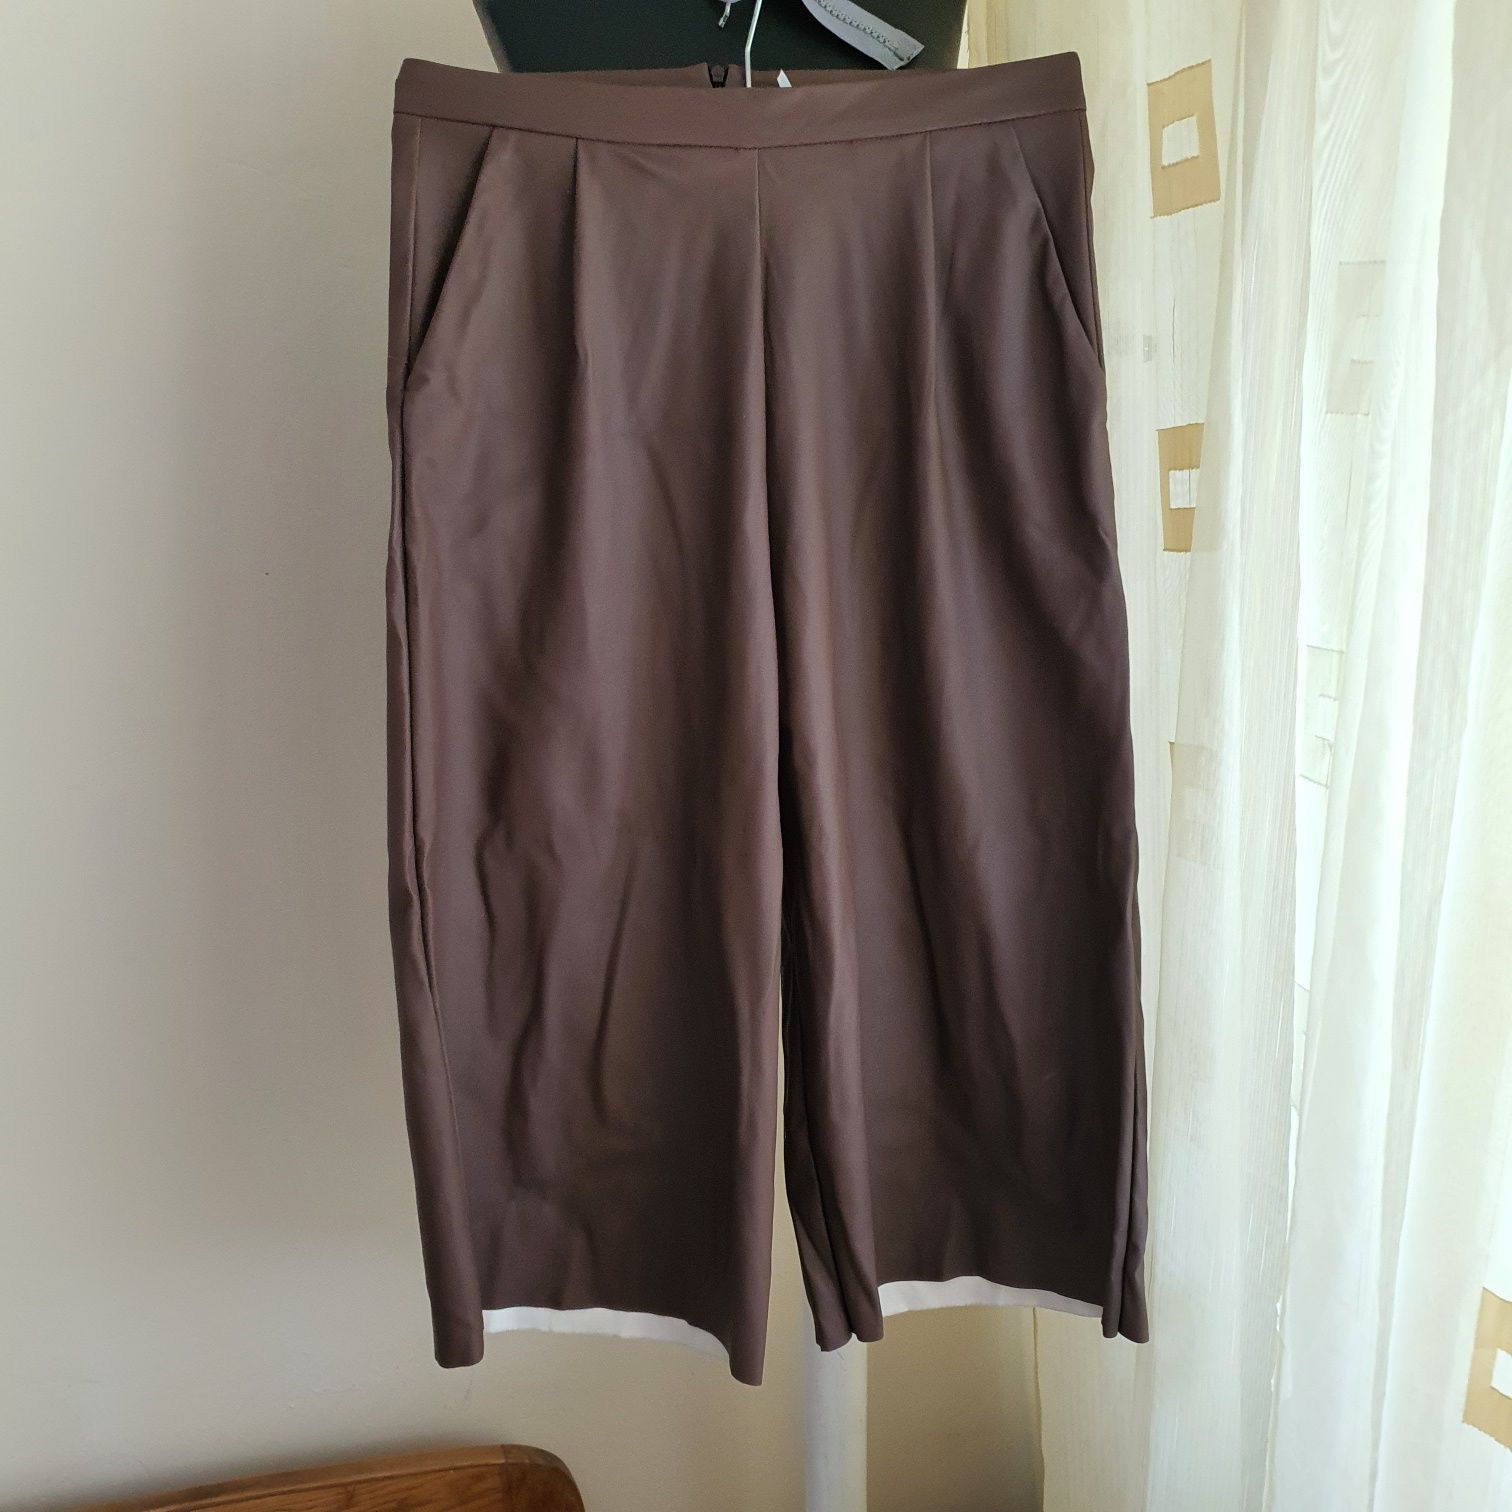 Pantaloni cullotes din piele ecologica ( stil Zara, bershka)